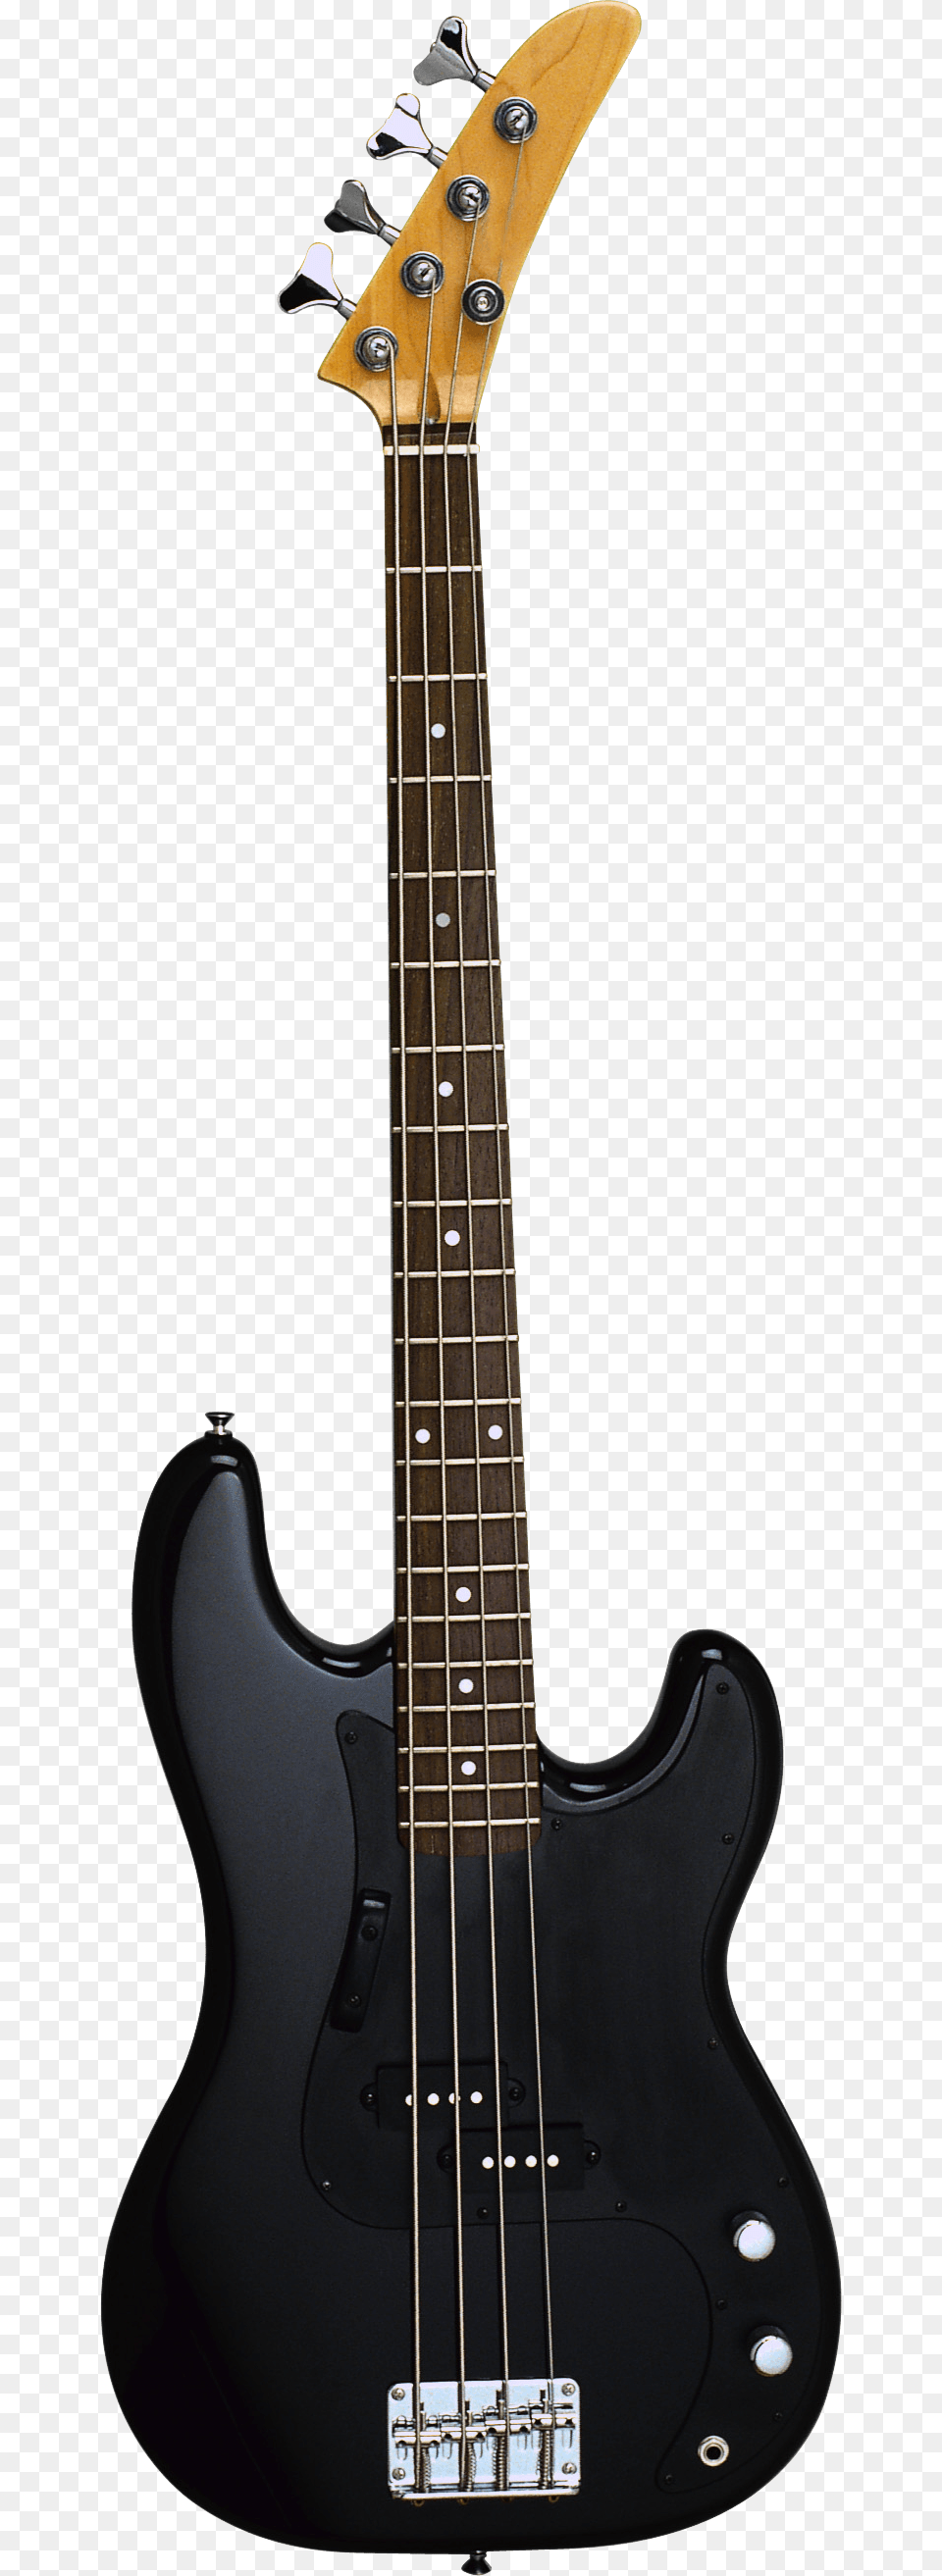 Black Electric Guitar, Bass Guitar, Musical Instrument Free Transparent Png